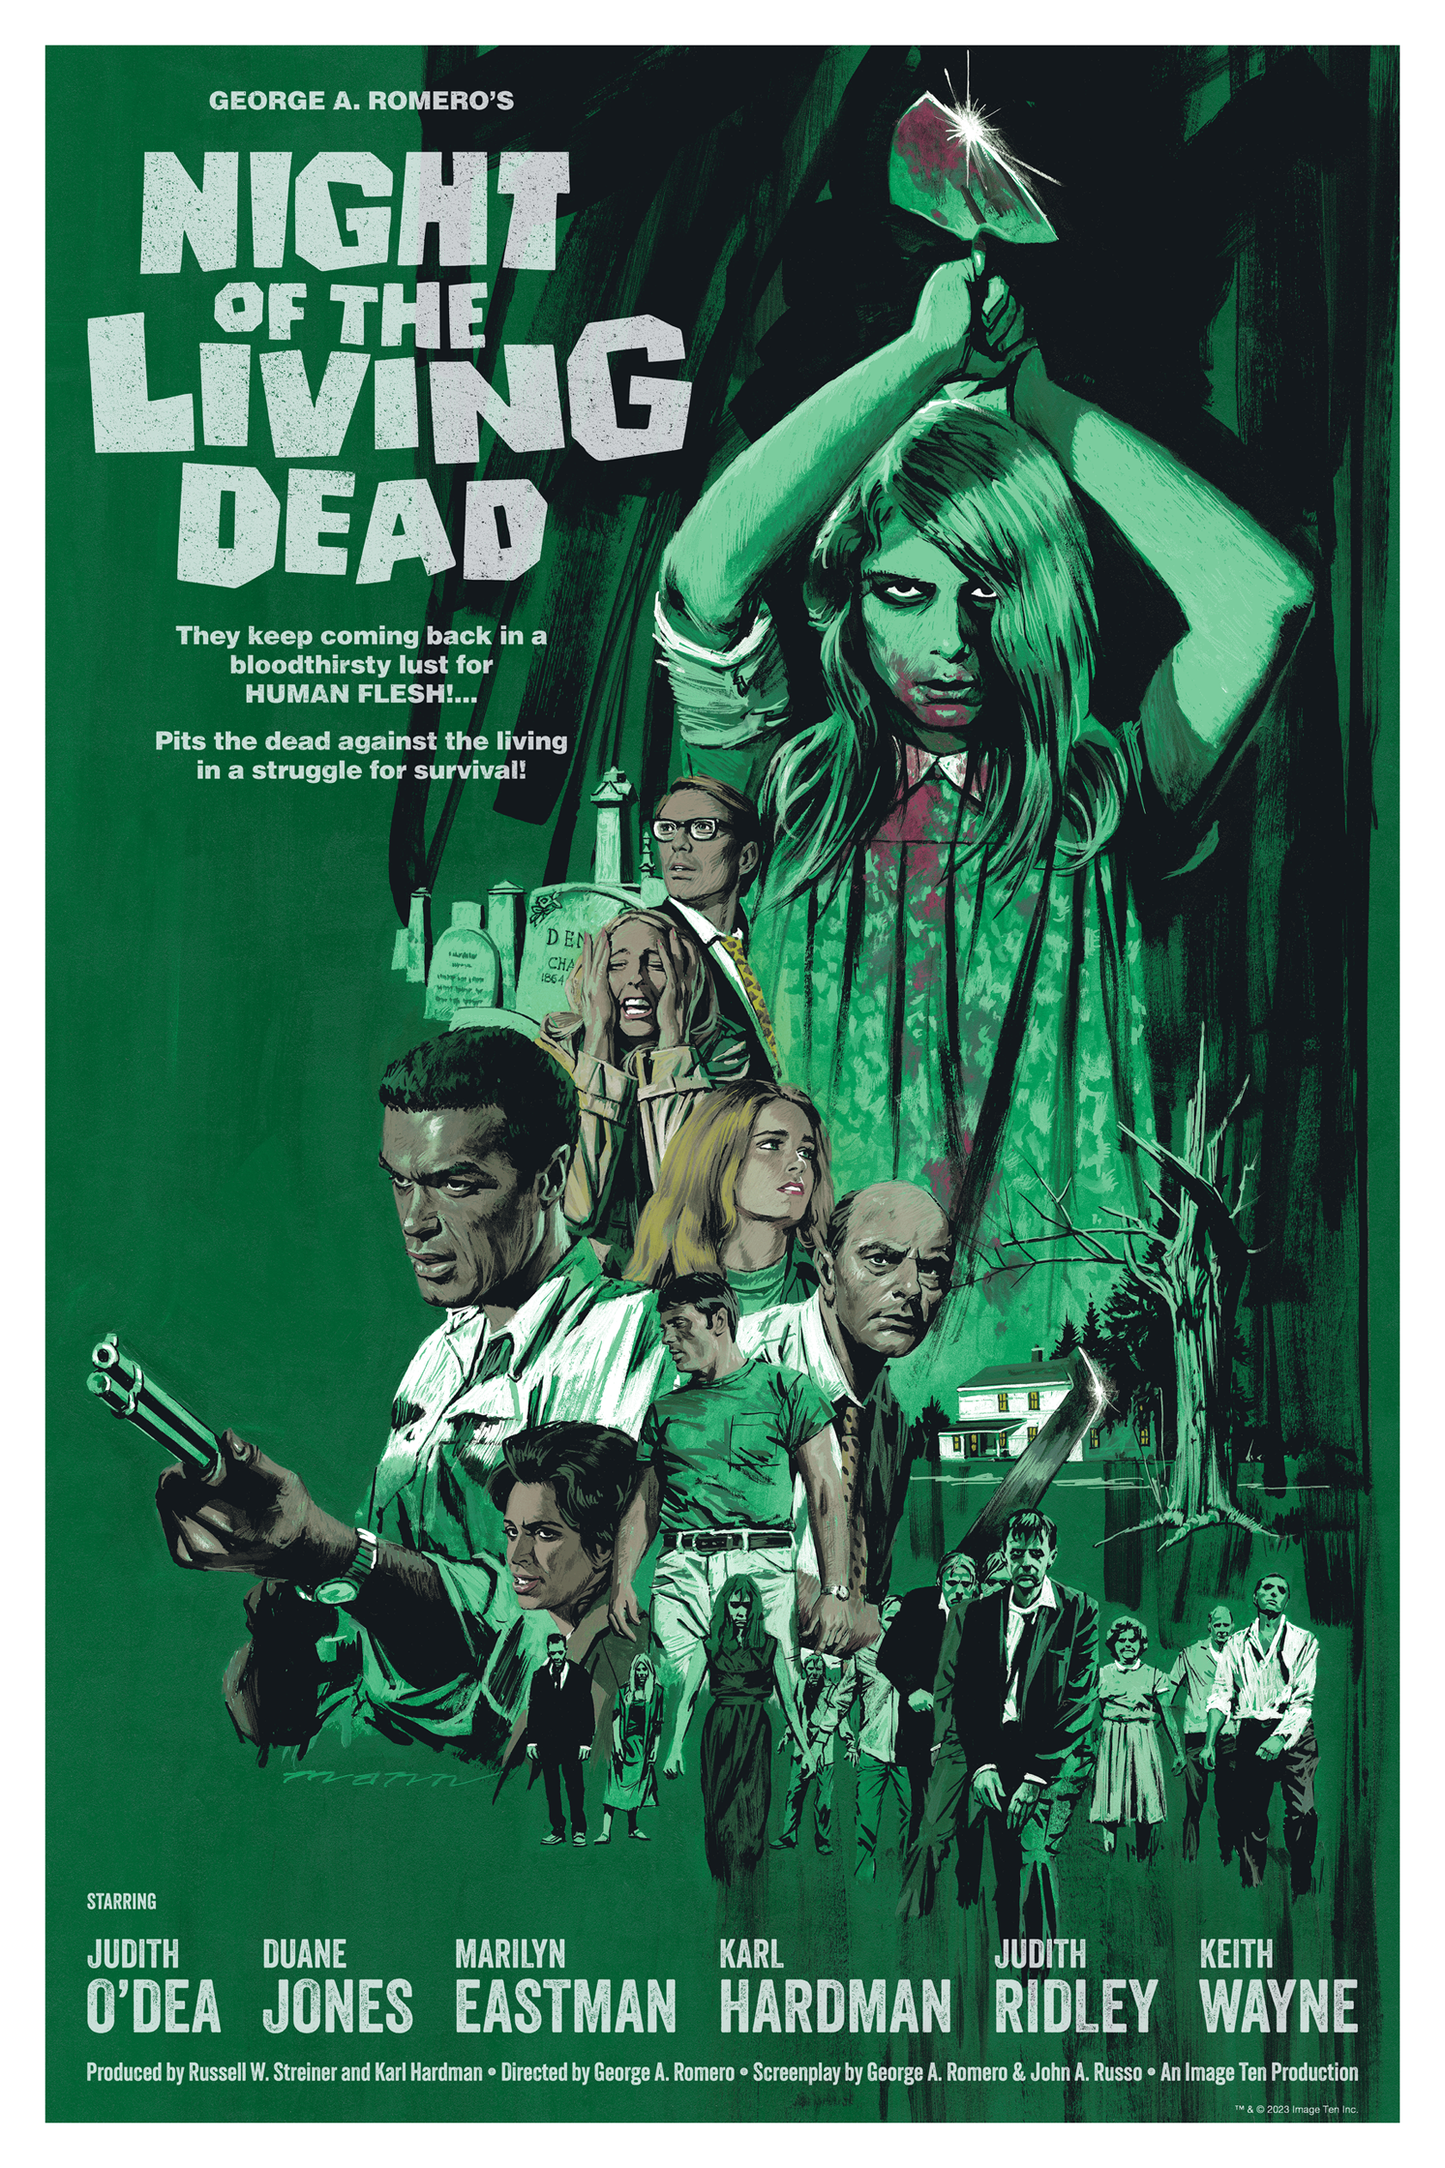 Paul Mann "Night of the Living Dead" Green Variant